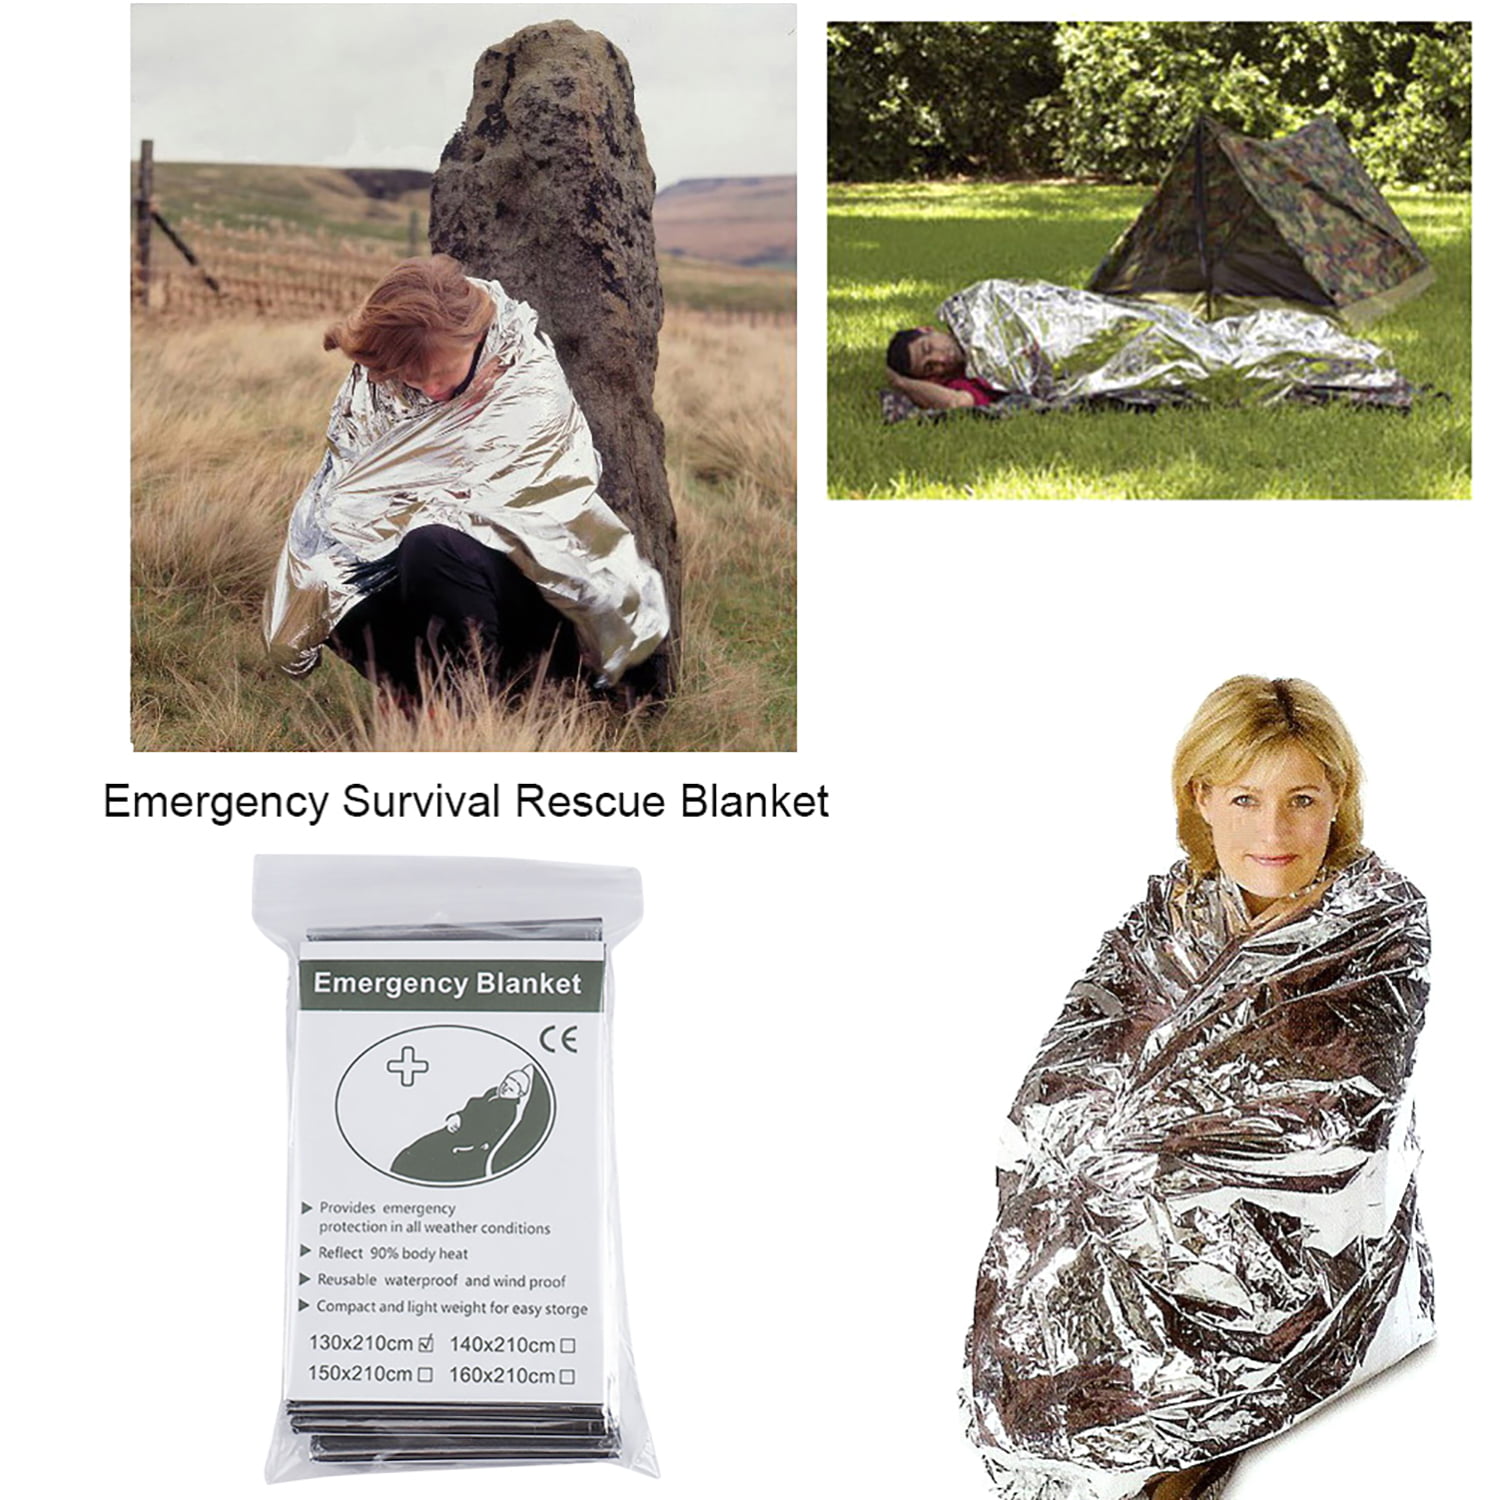 Details about   Outdoor Travel Lightweight Emergency Tent Sleeping Bag Keep Warm Waterproof New